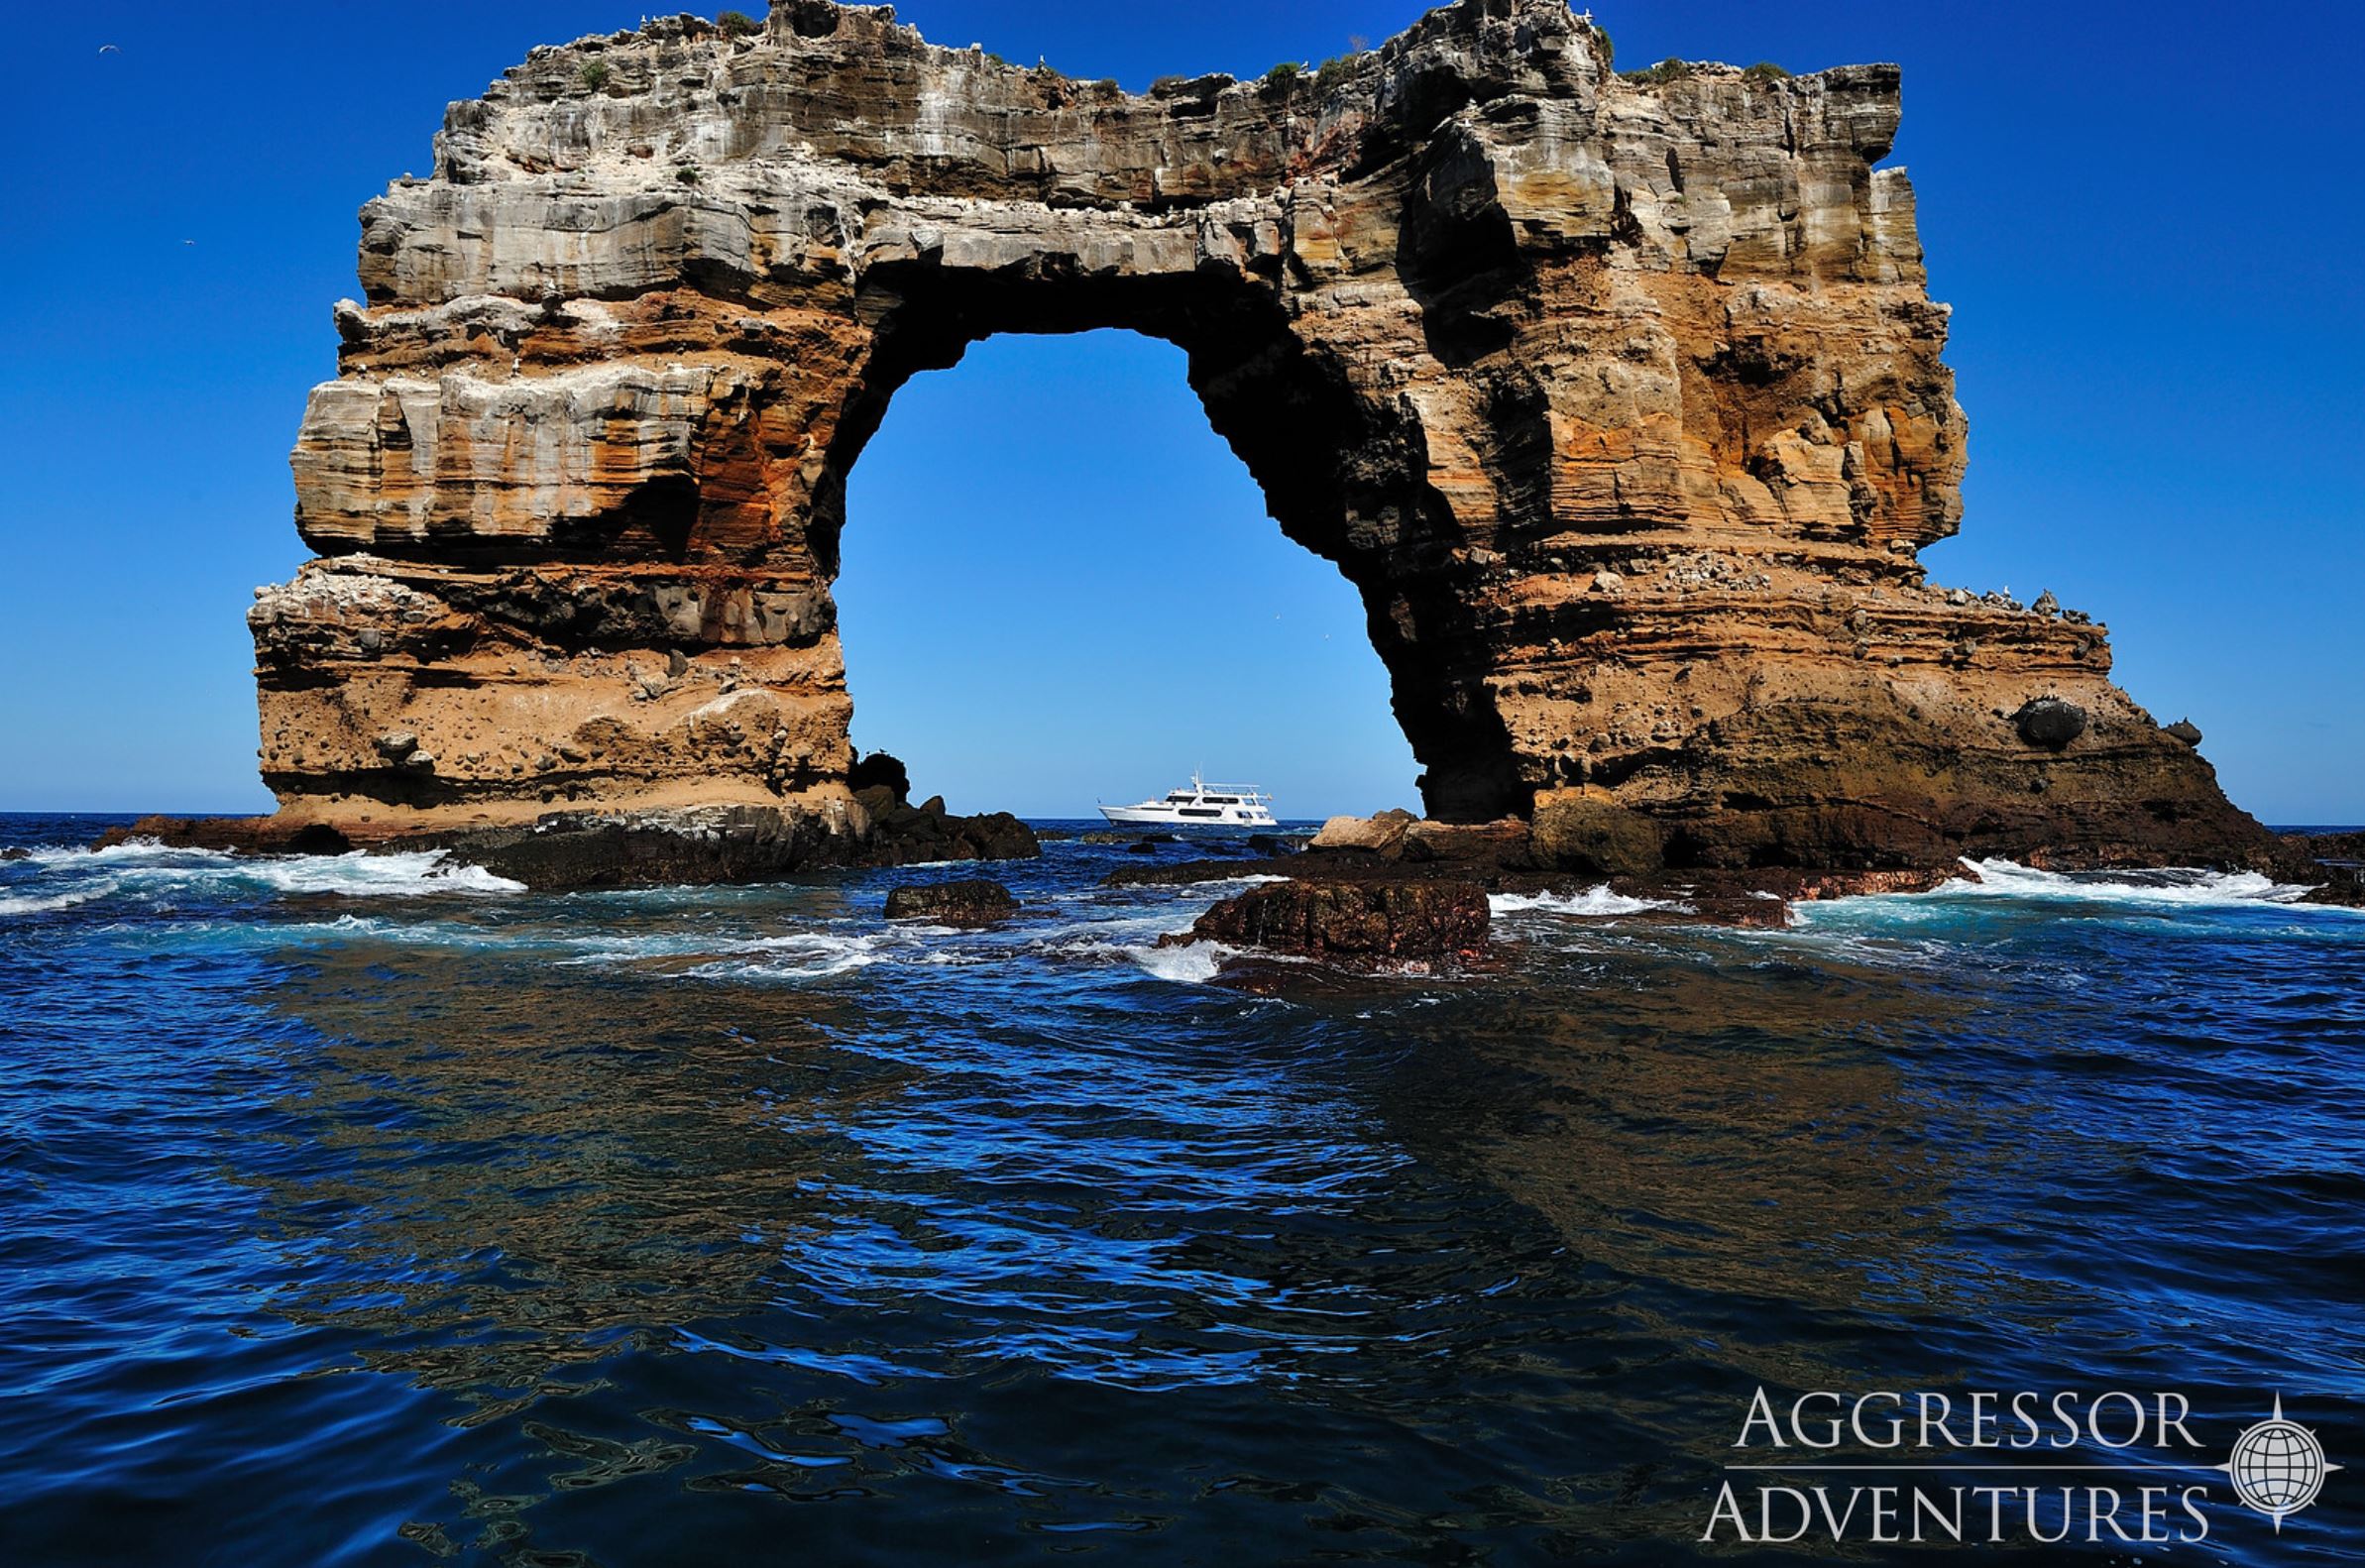 Galapagos Aggressor III adventure: Galapagos Aggressor III Tauchexpedition 8 Tage/7 Nächte Kreuzfahrt mit Insel Wolf & Darwin (18 dives)